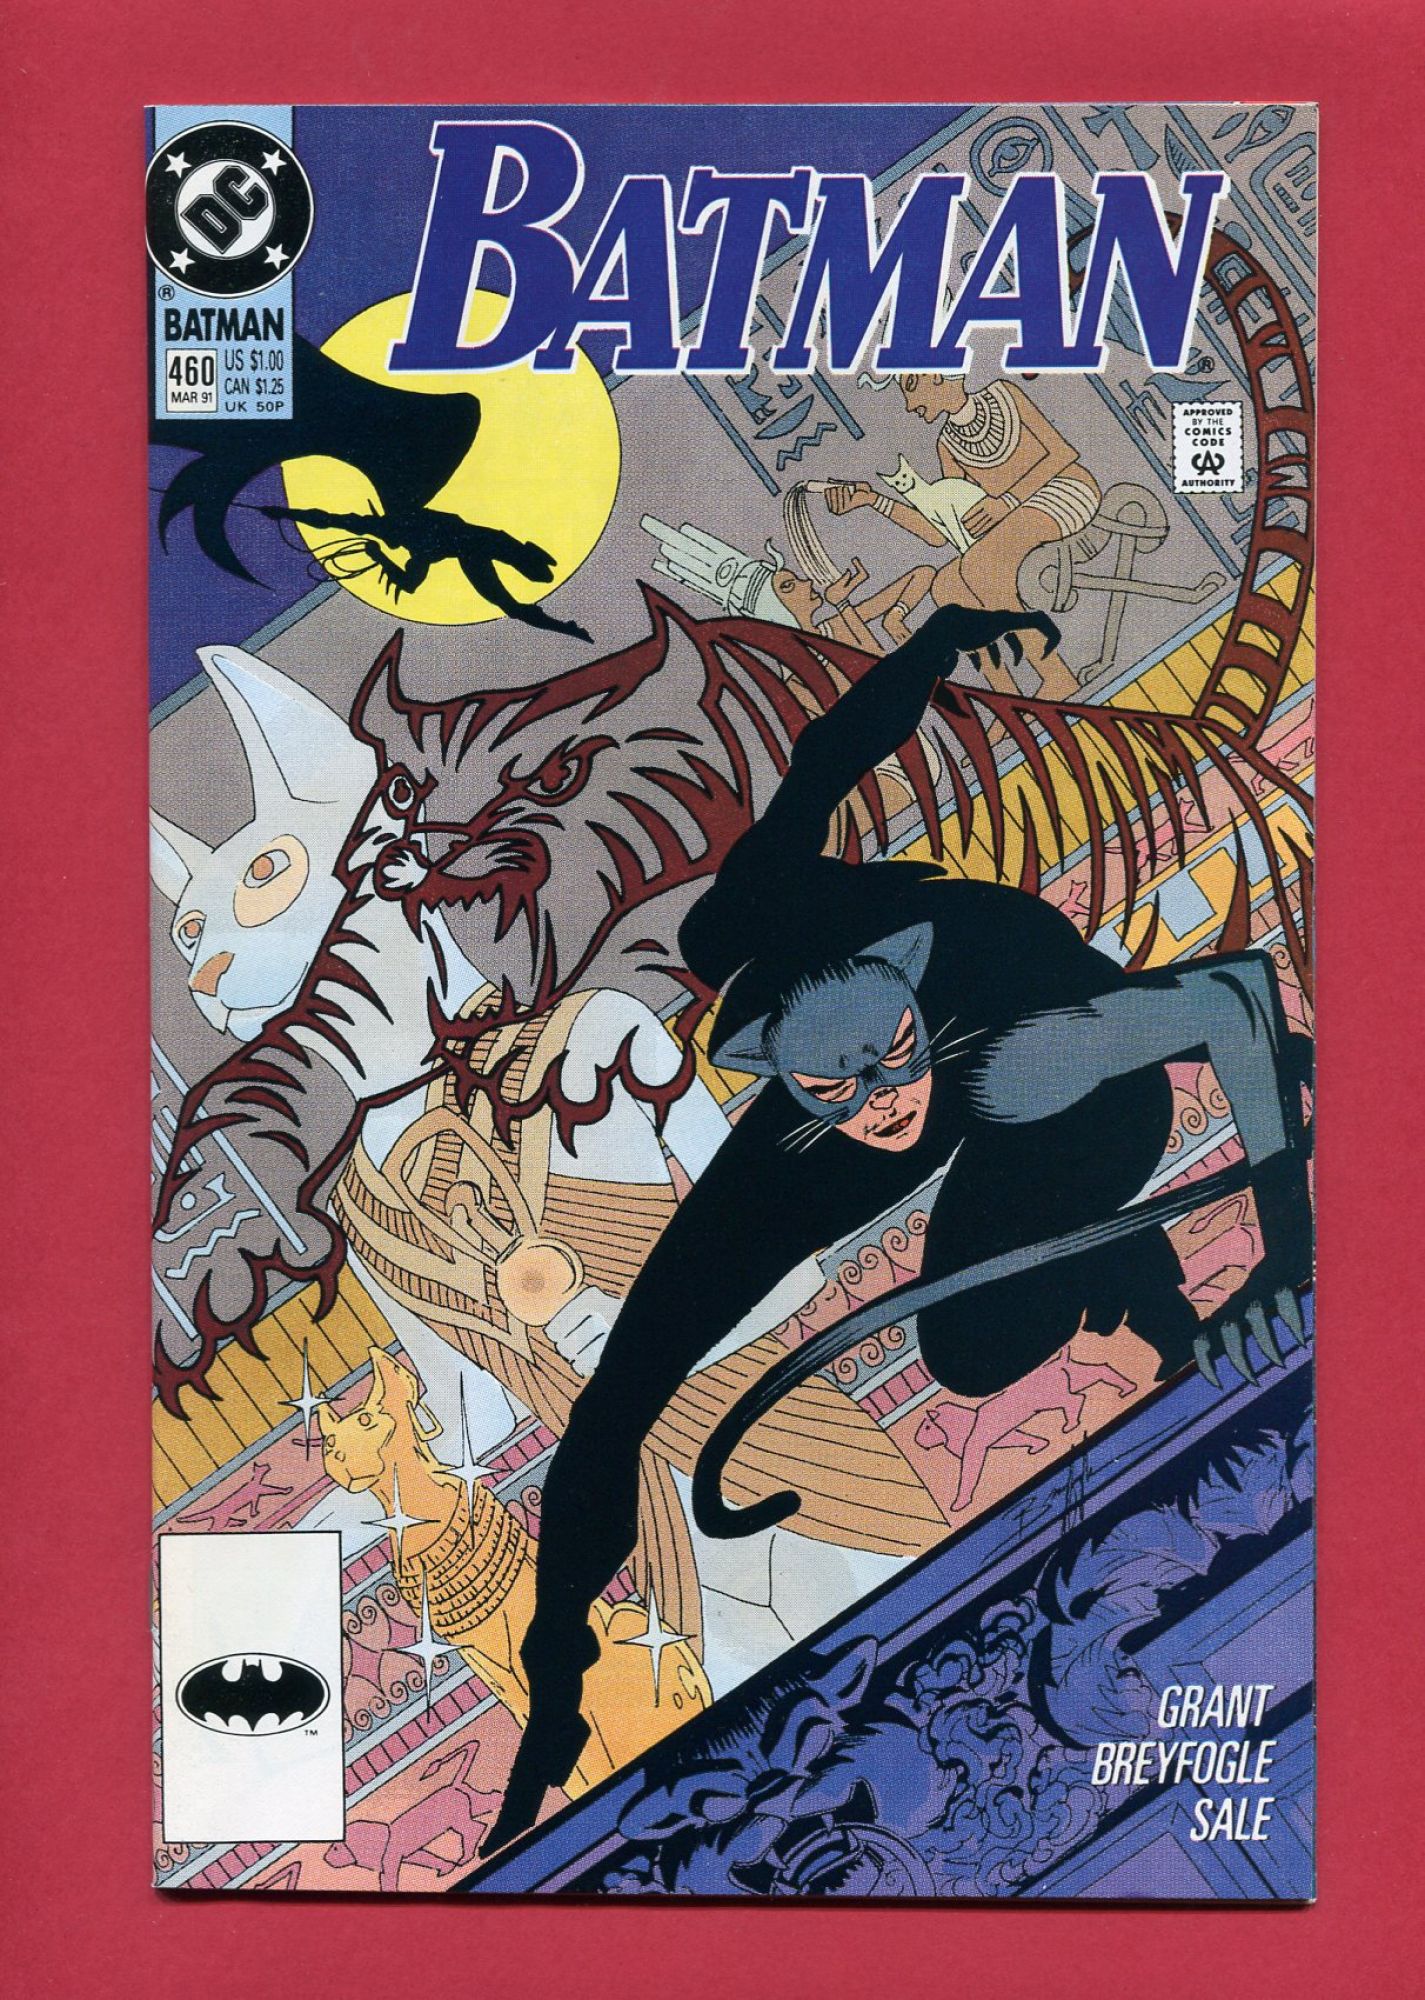 Batman #460, Mar 1991, 9.2 NM-